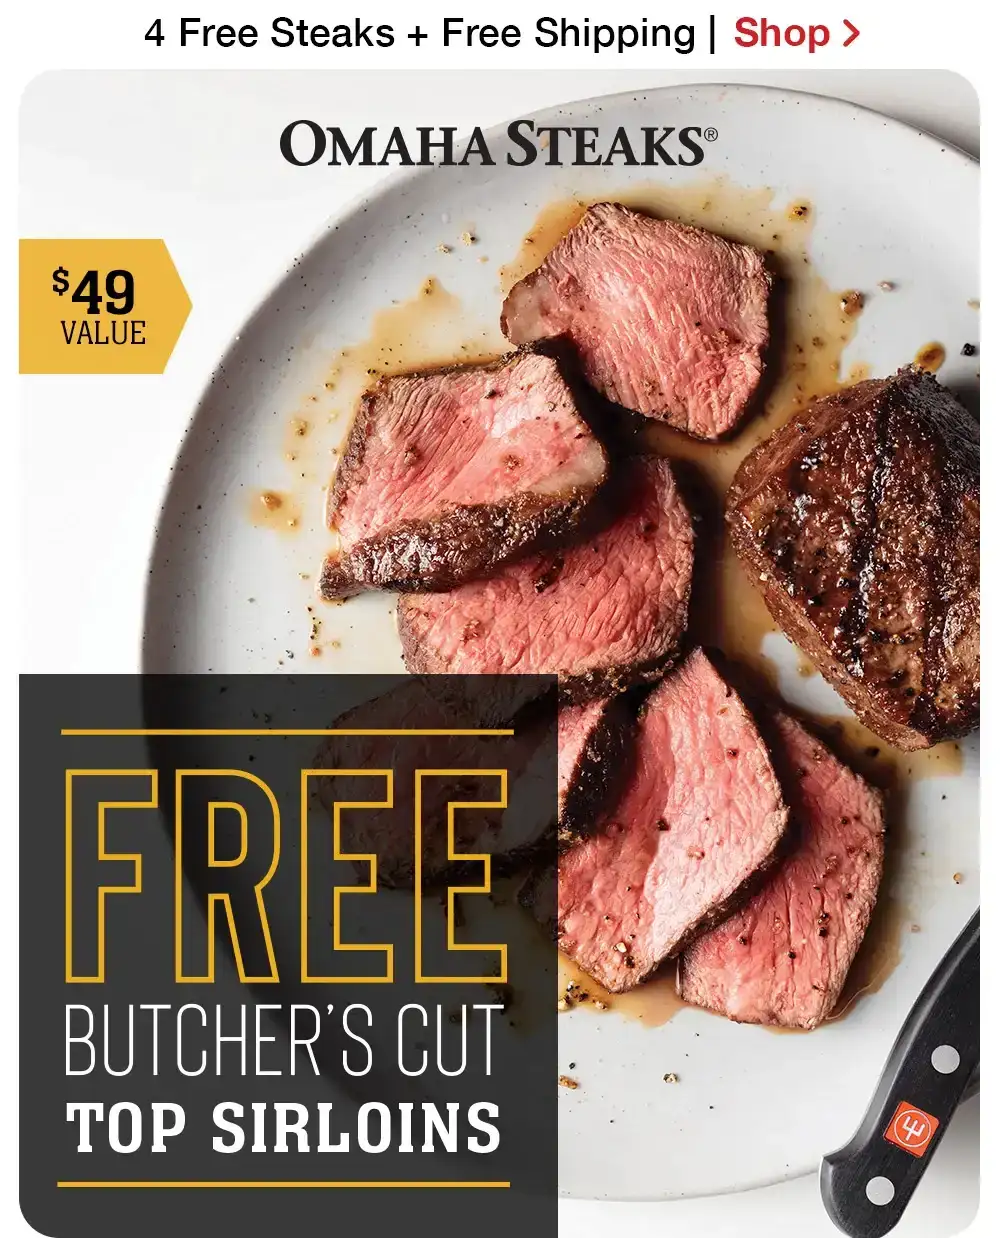 4 Free Steaks + Free Shipping | Shop > | OMAHA STEAKS® \\$49 VALUE FREE BUTCHER'S CUT TOP SIRLOINS || Shop Now